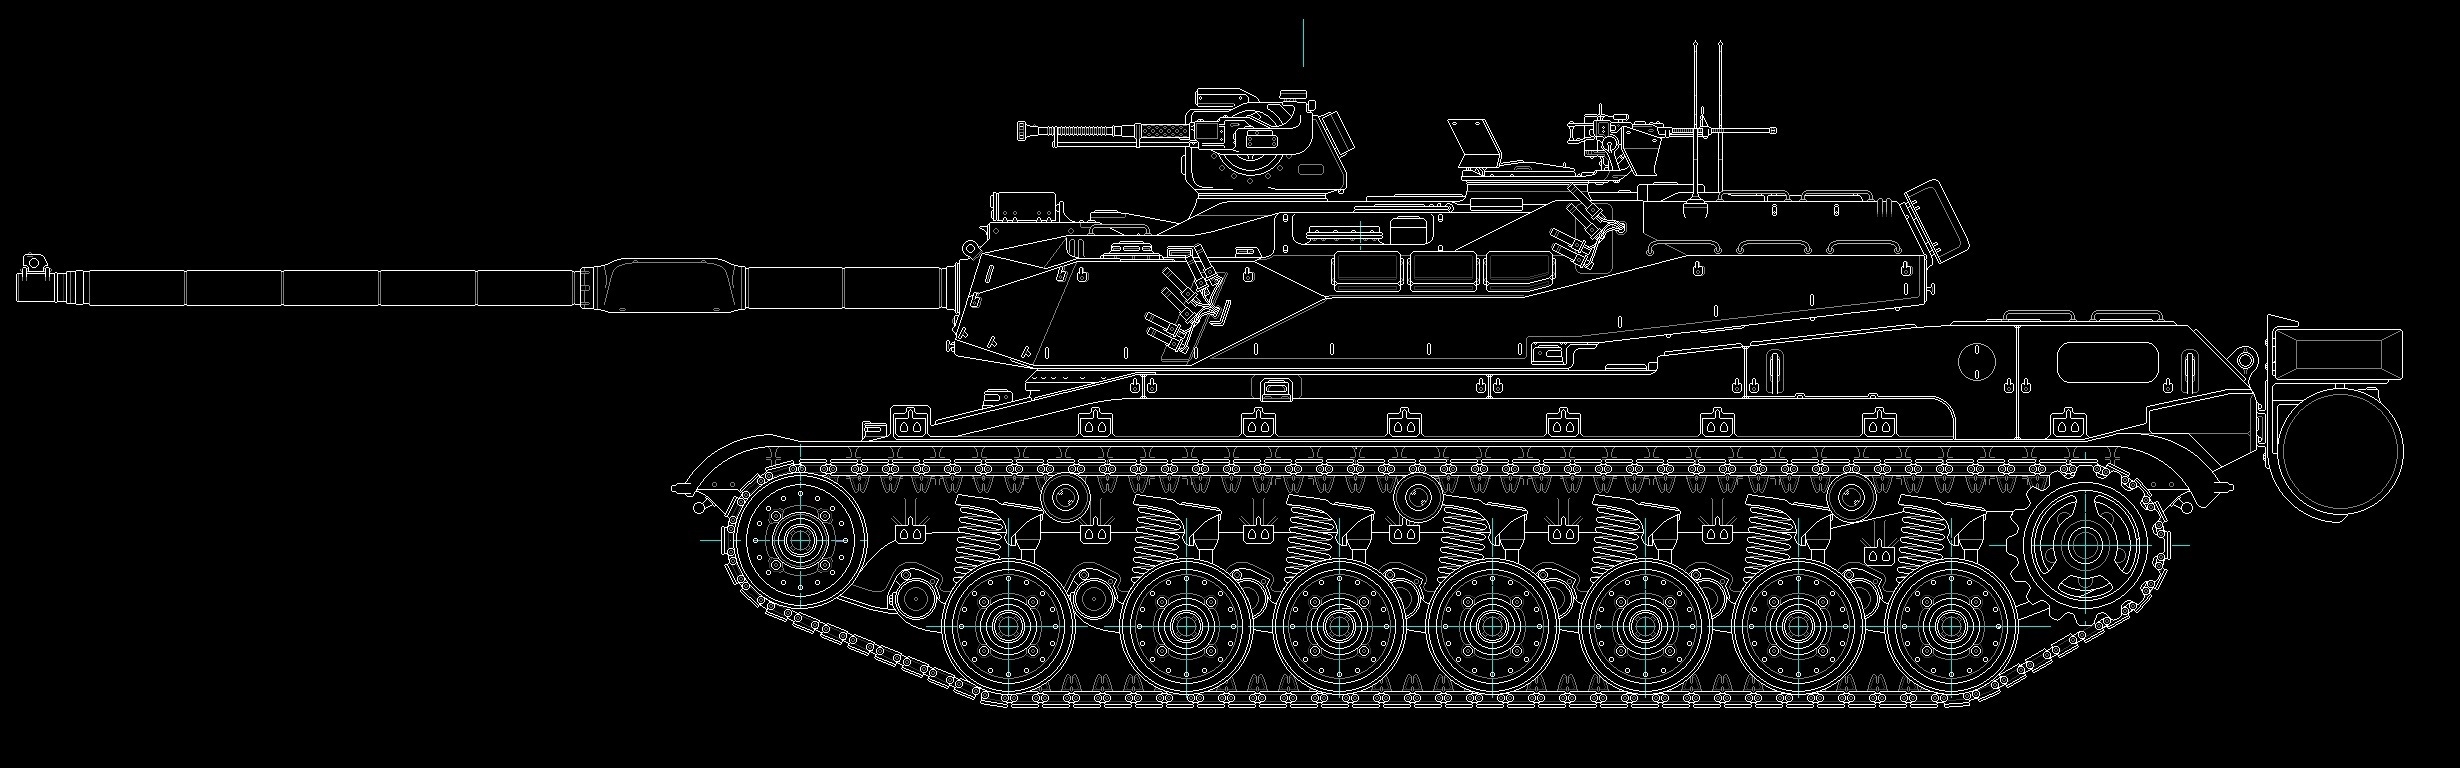 tanc-romanesc-vedere-laterala-3.jpg